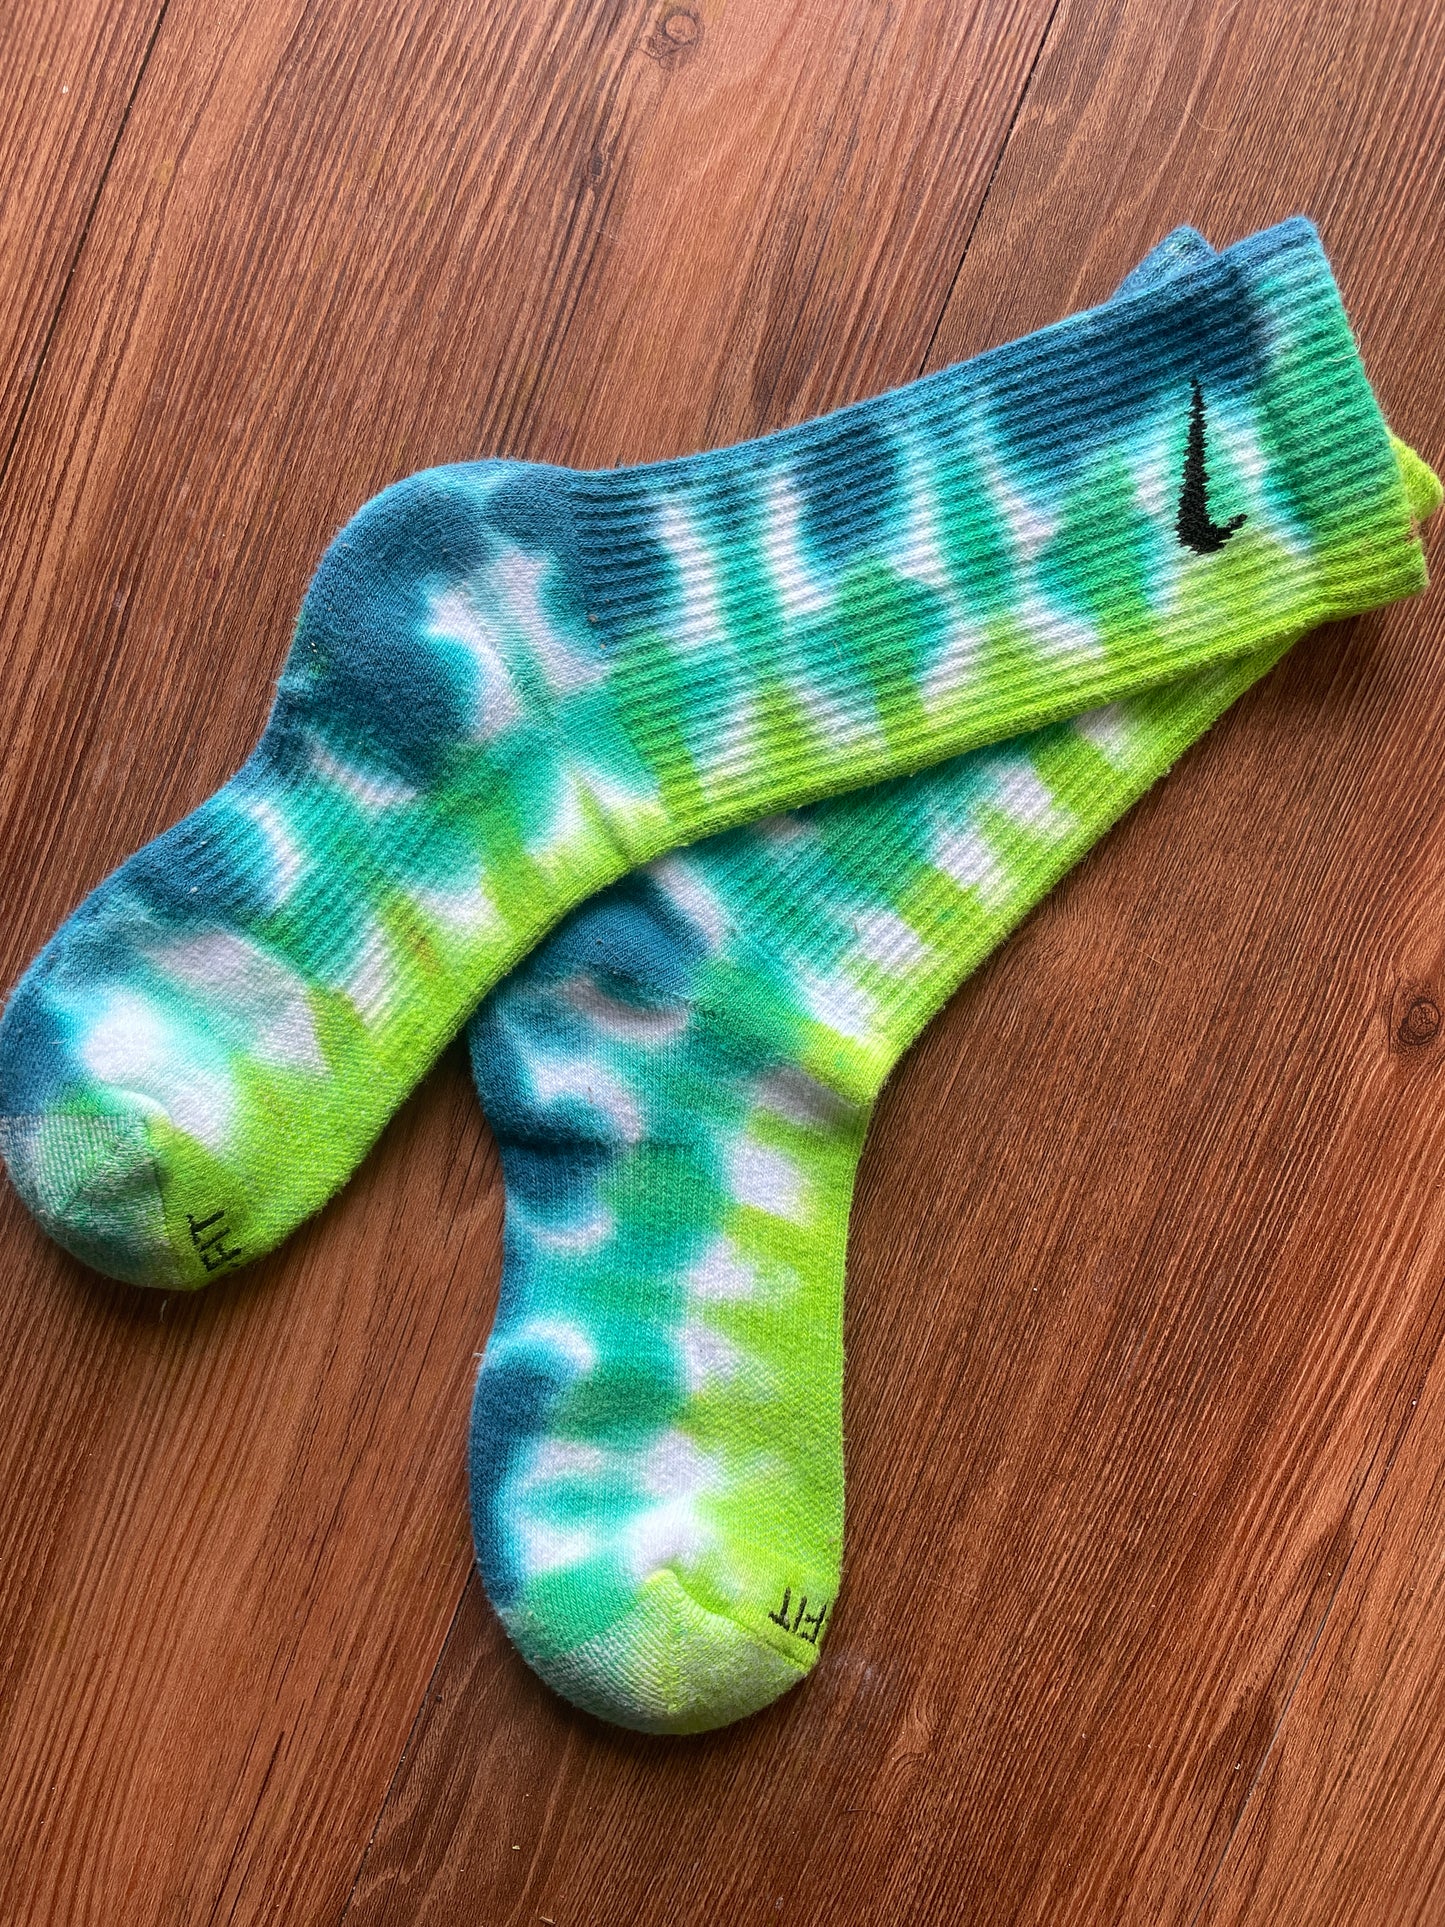 Blue, Green, and Teal Tie Dye Nike Dri-FIT Training Socks - Size Medium (Men's 6-8/Women's 7-10)